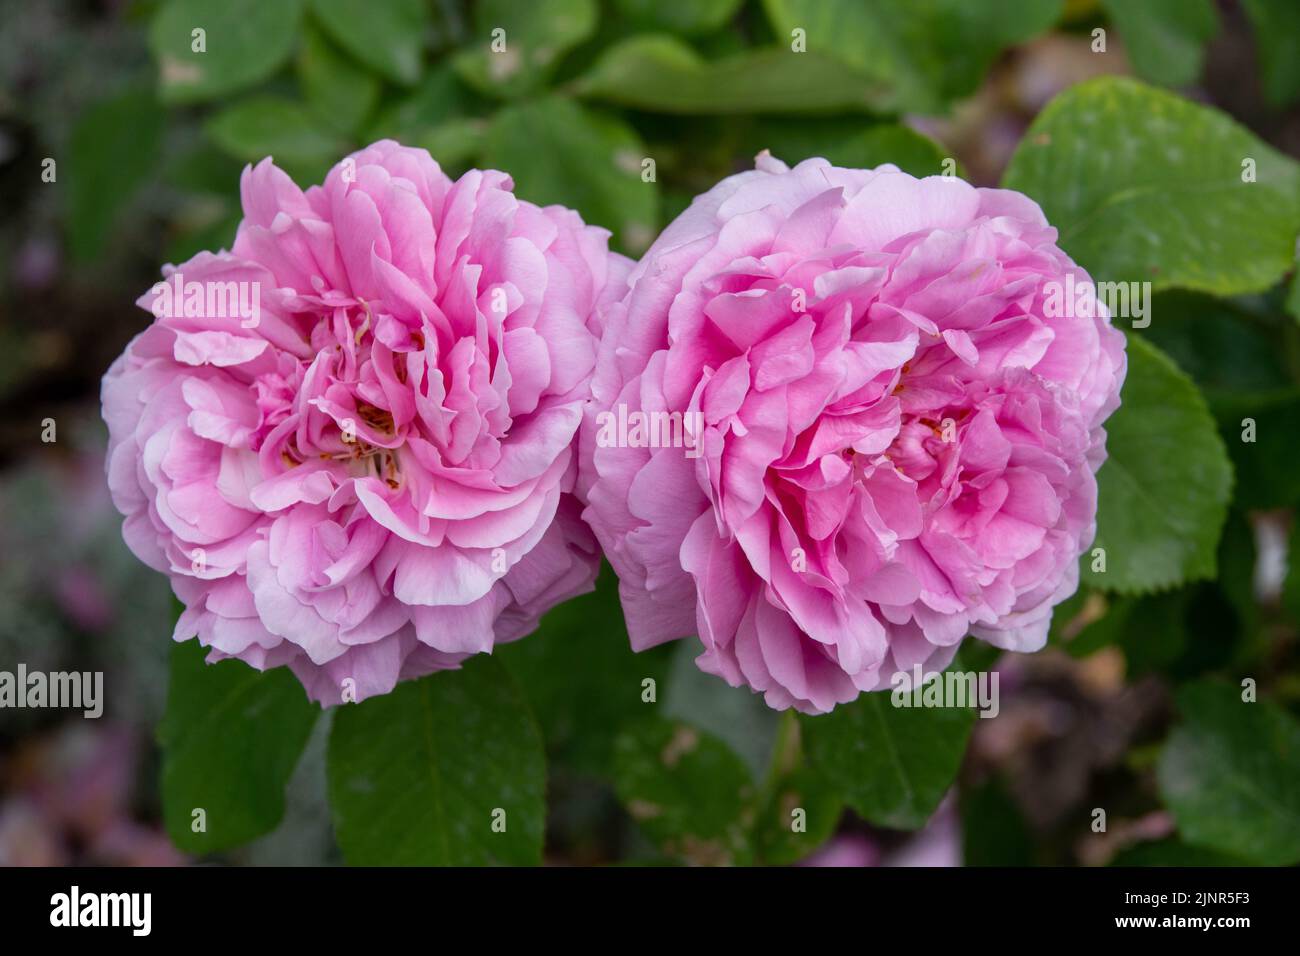 beautiful pink rose flower heads Stock Photo